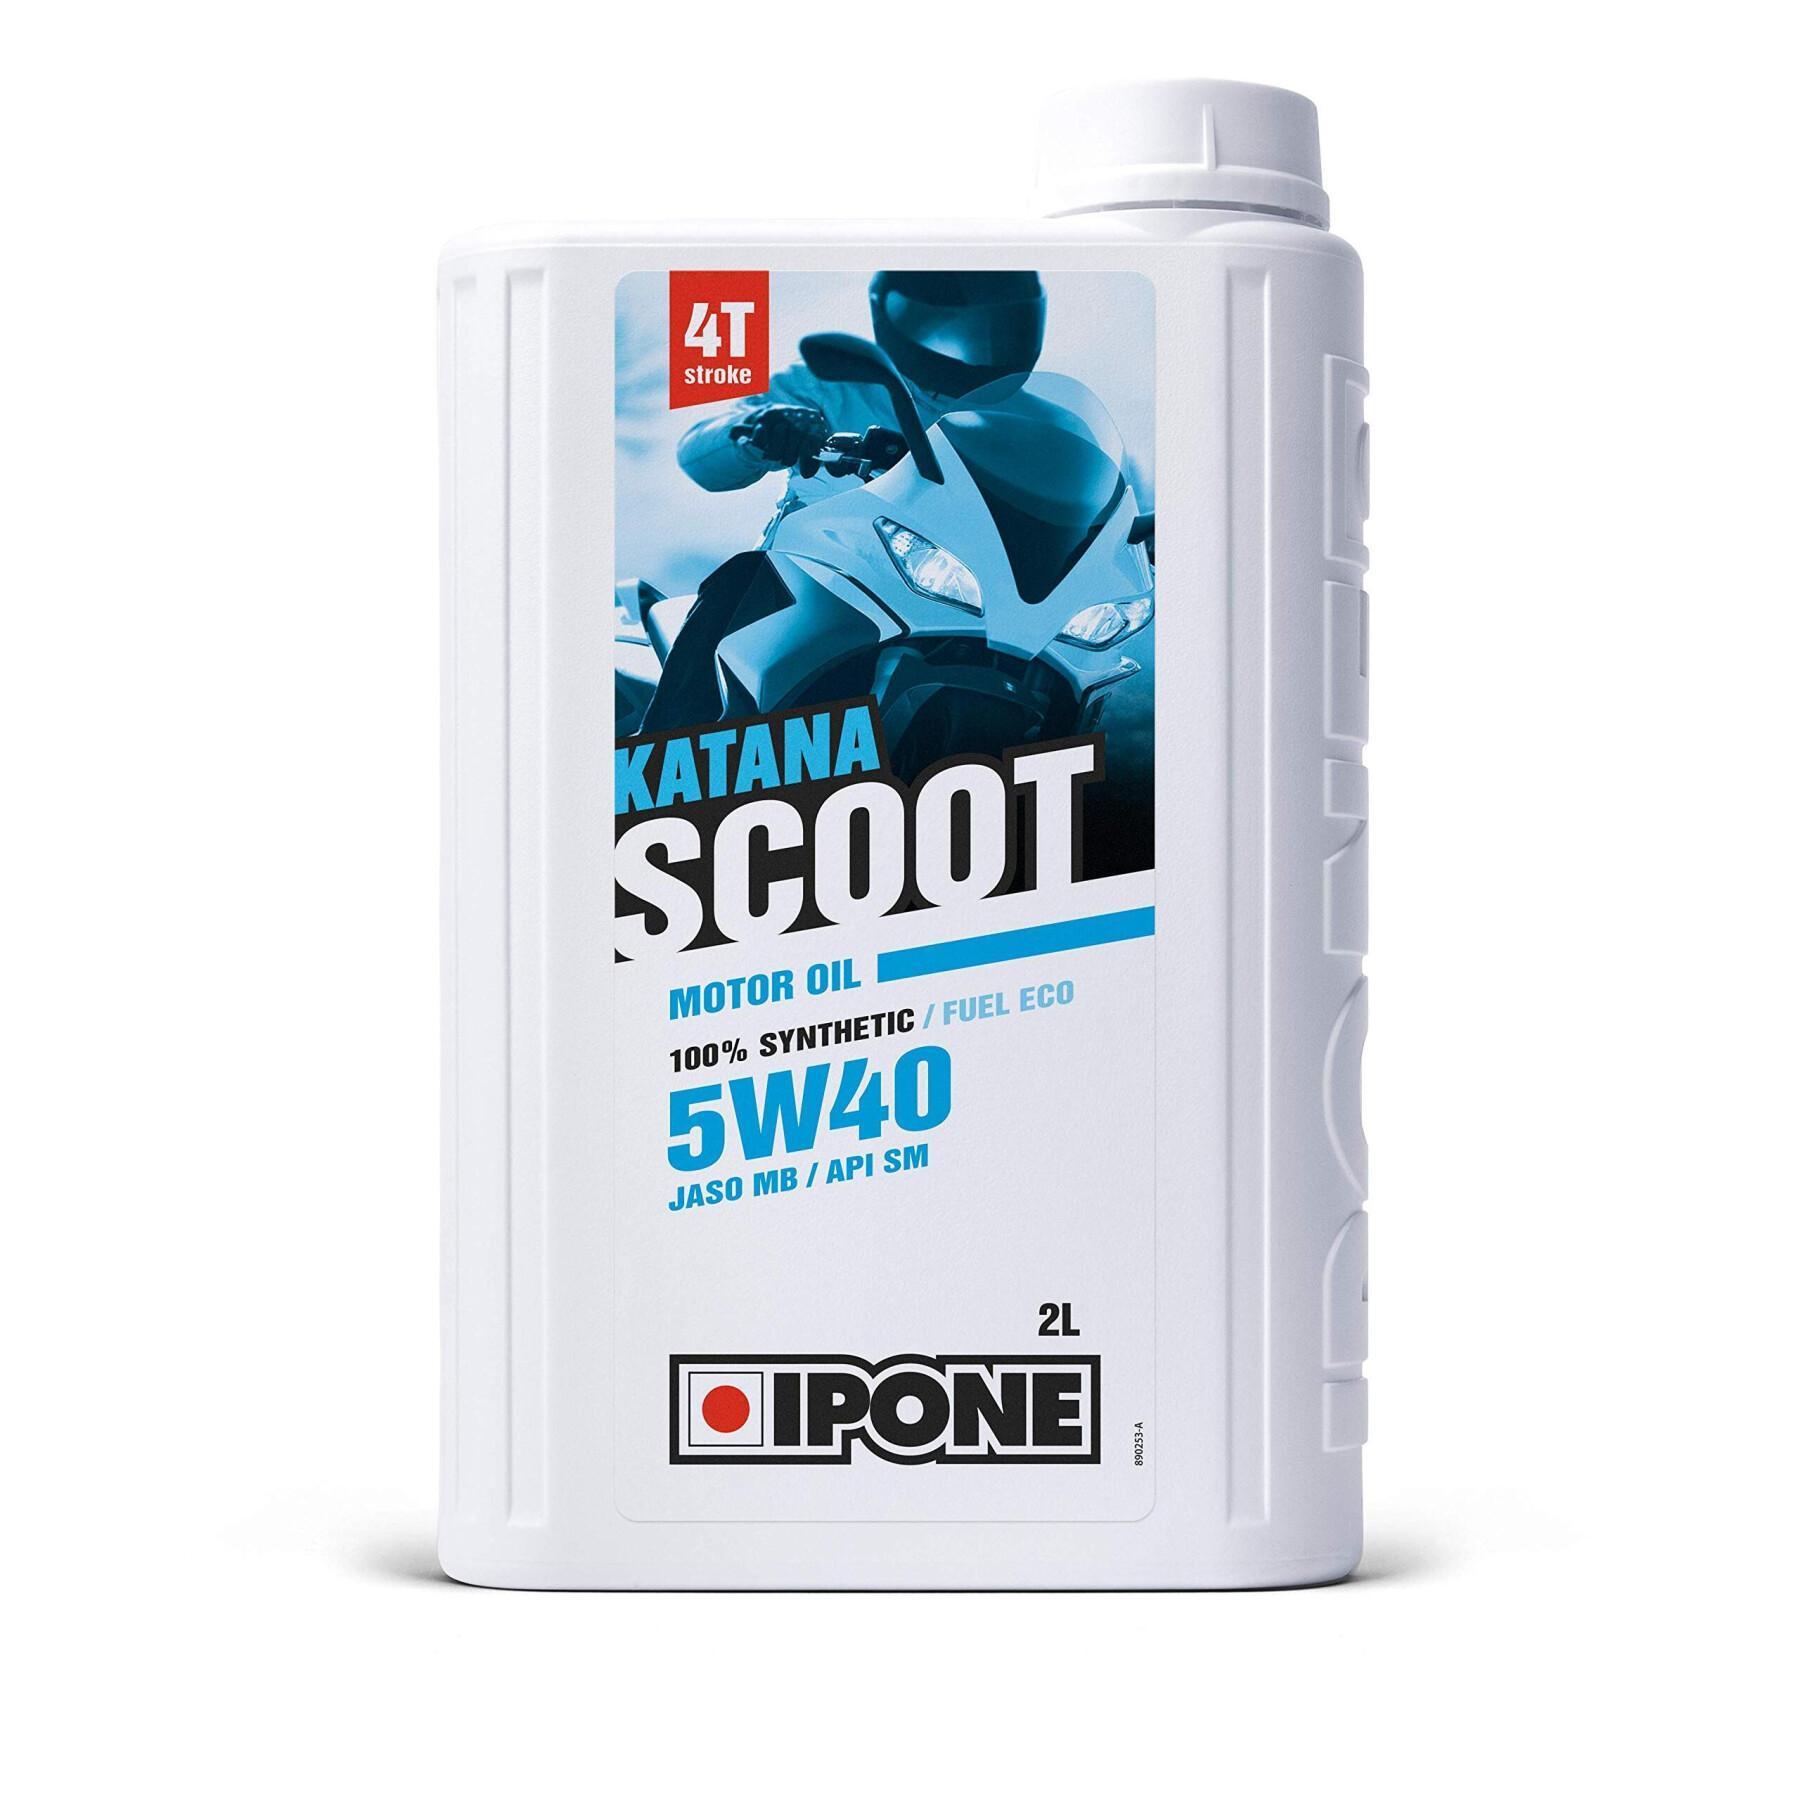 Aceite para motos ipone katana scoot 5w40